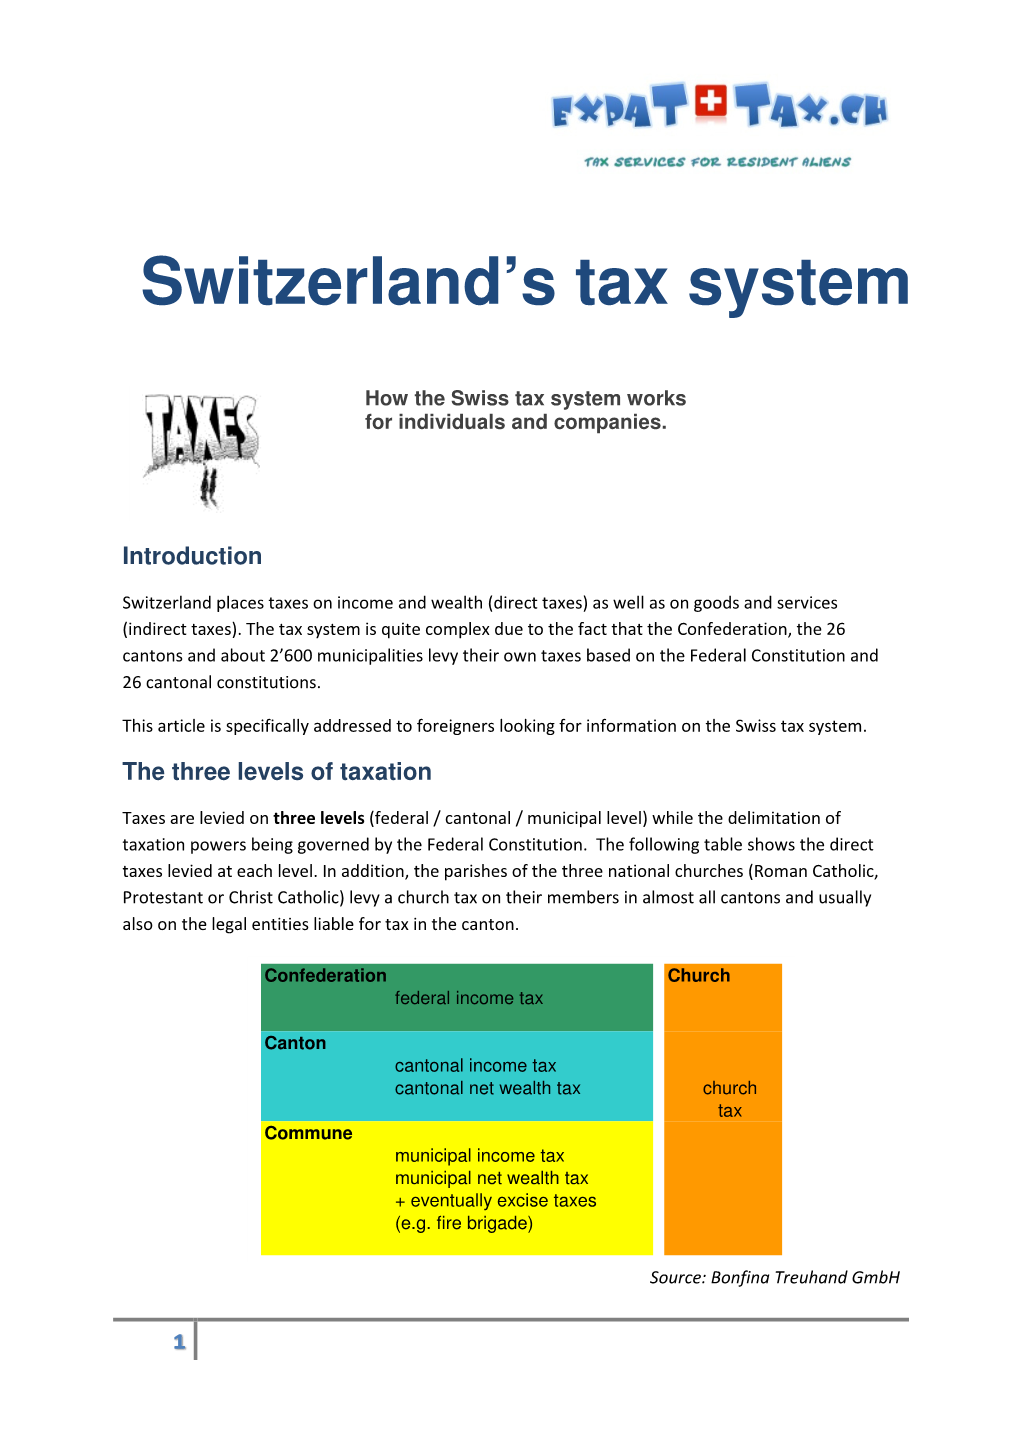 Switzerland's Tax System